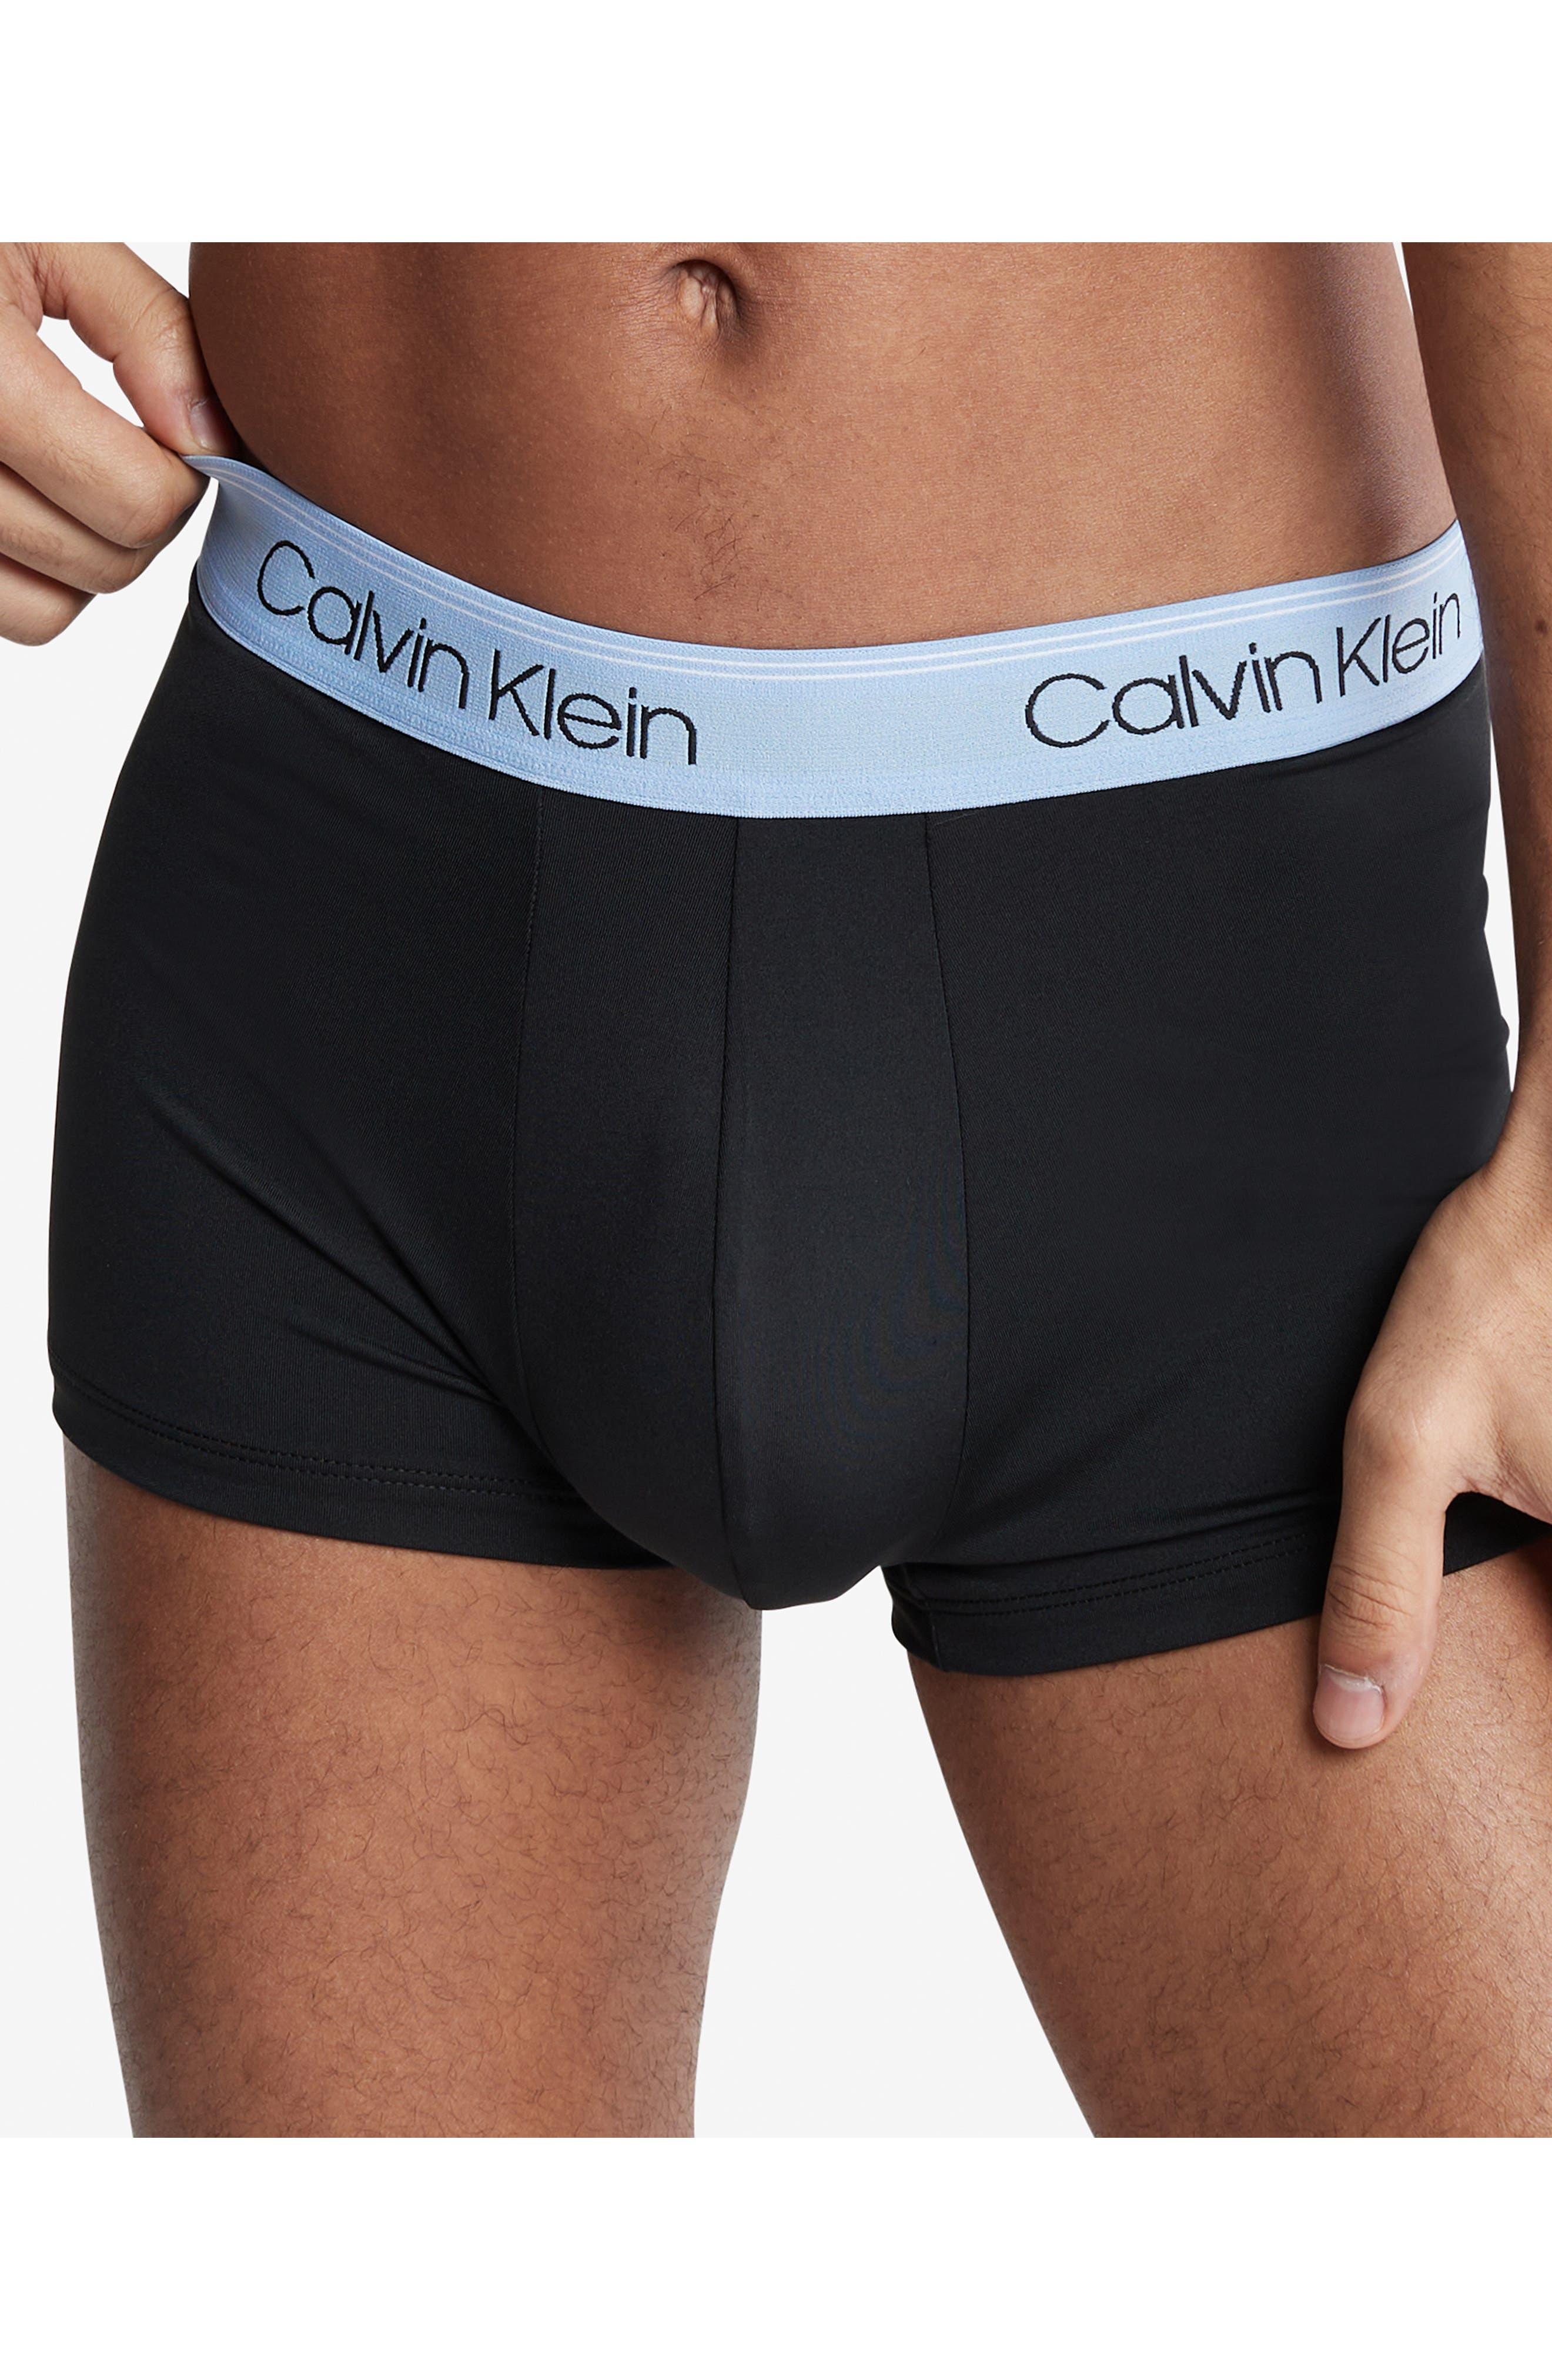 NEW Calvin Klein 4 Pack Microfiber Stretch Low Rise Trunk